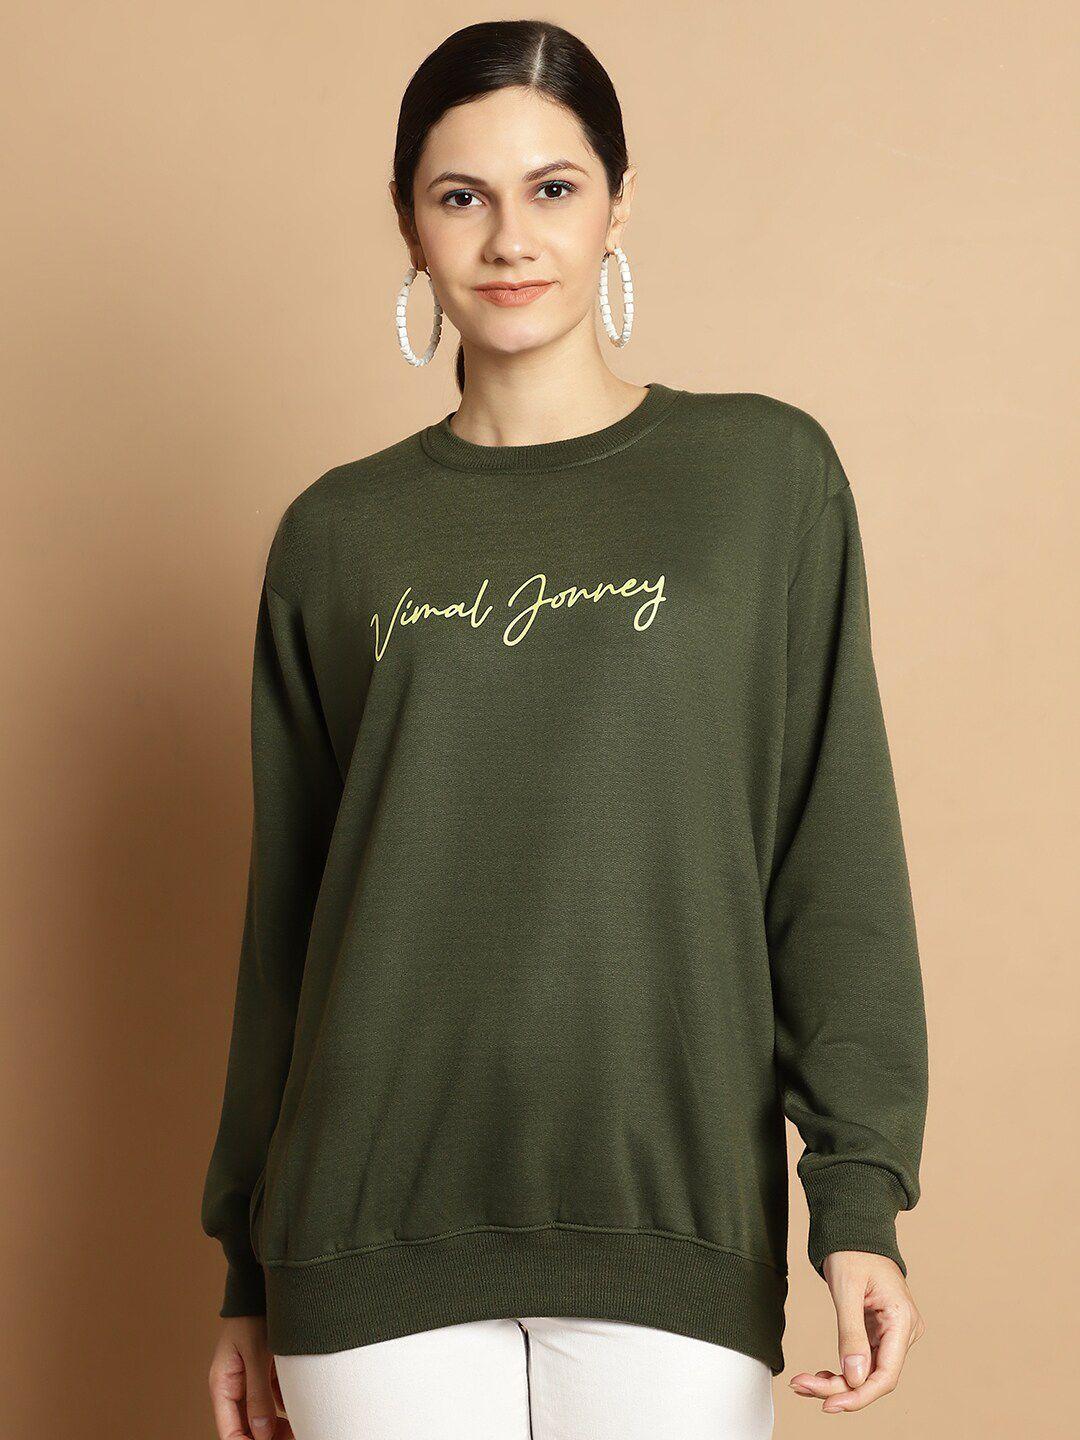 vimal-jonney-typography-printed-fleece-pullover-sweatshirt